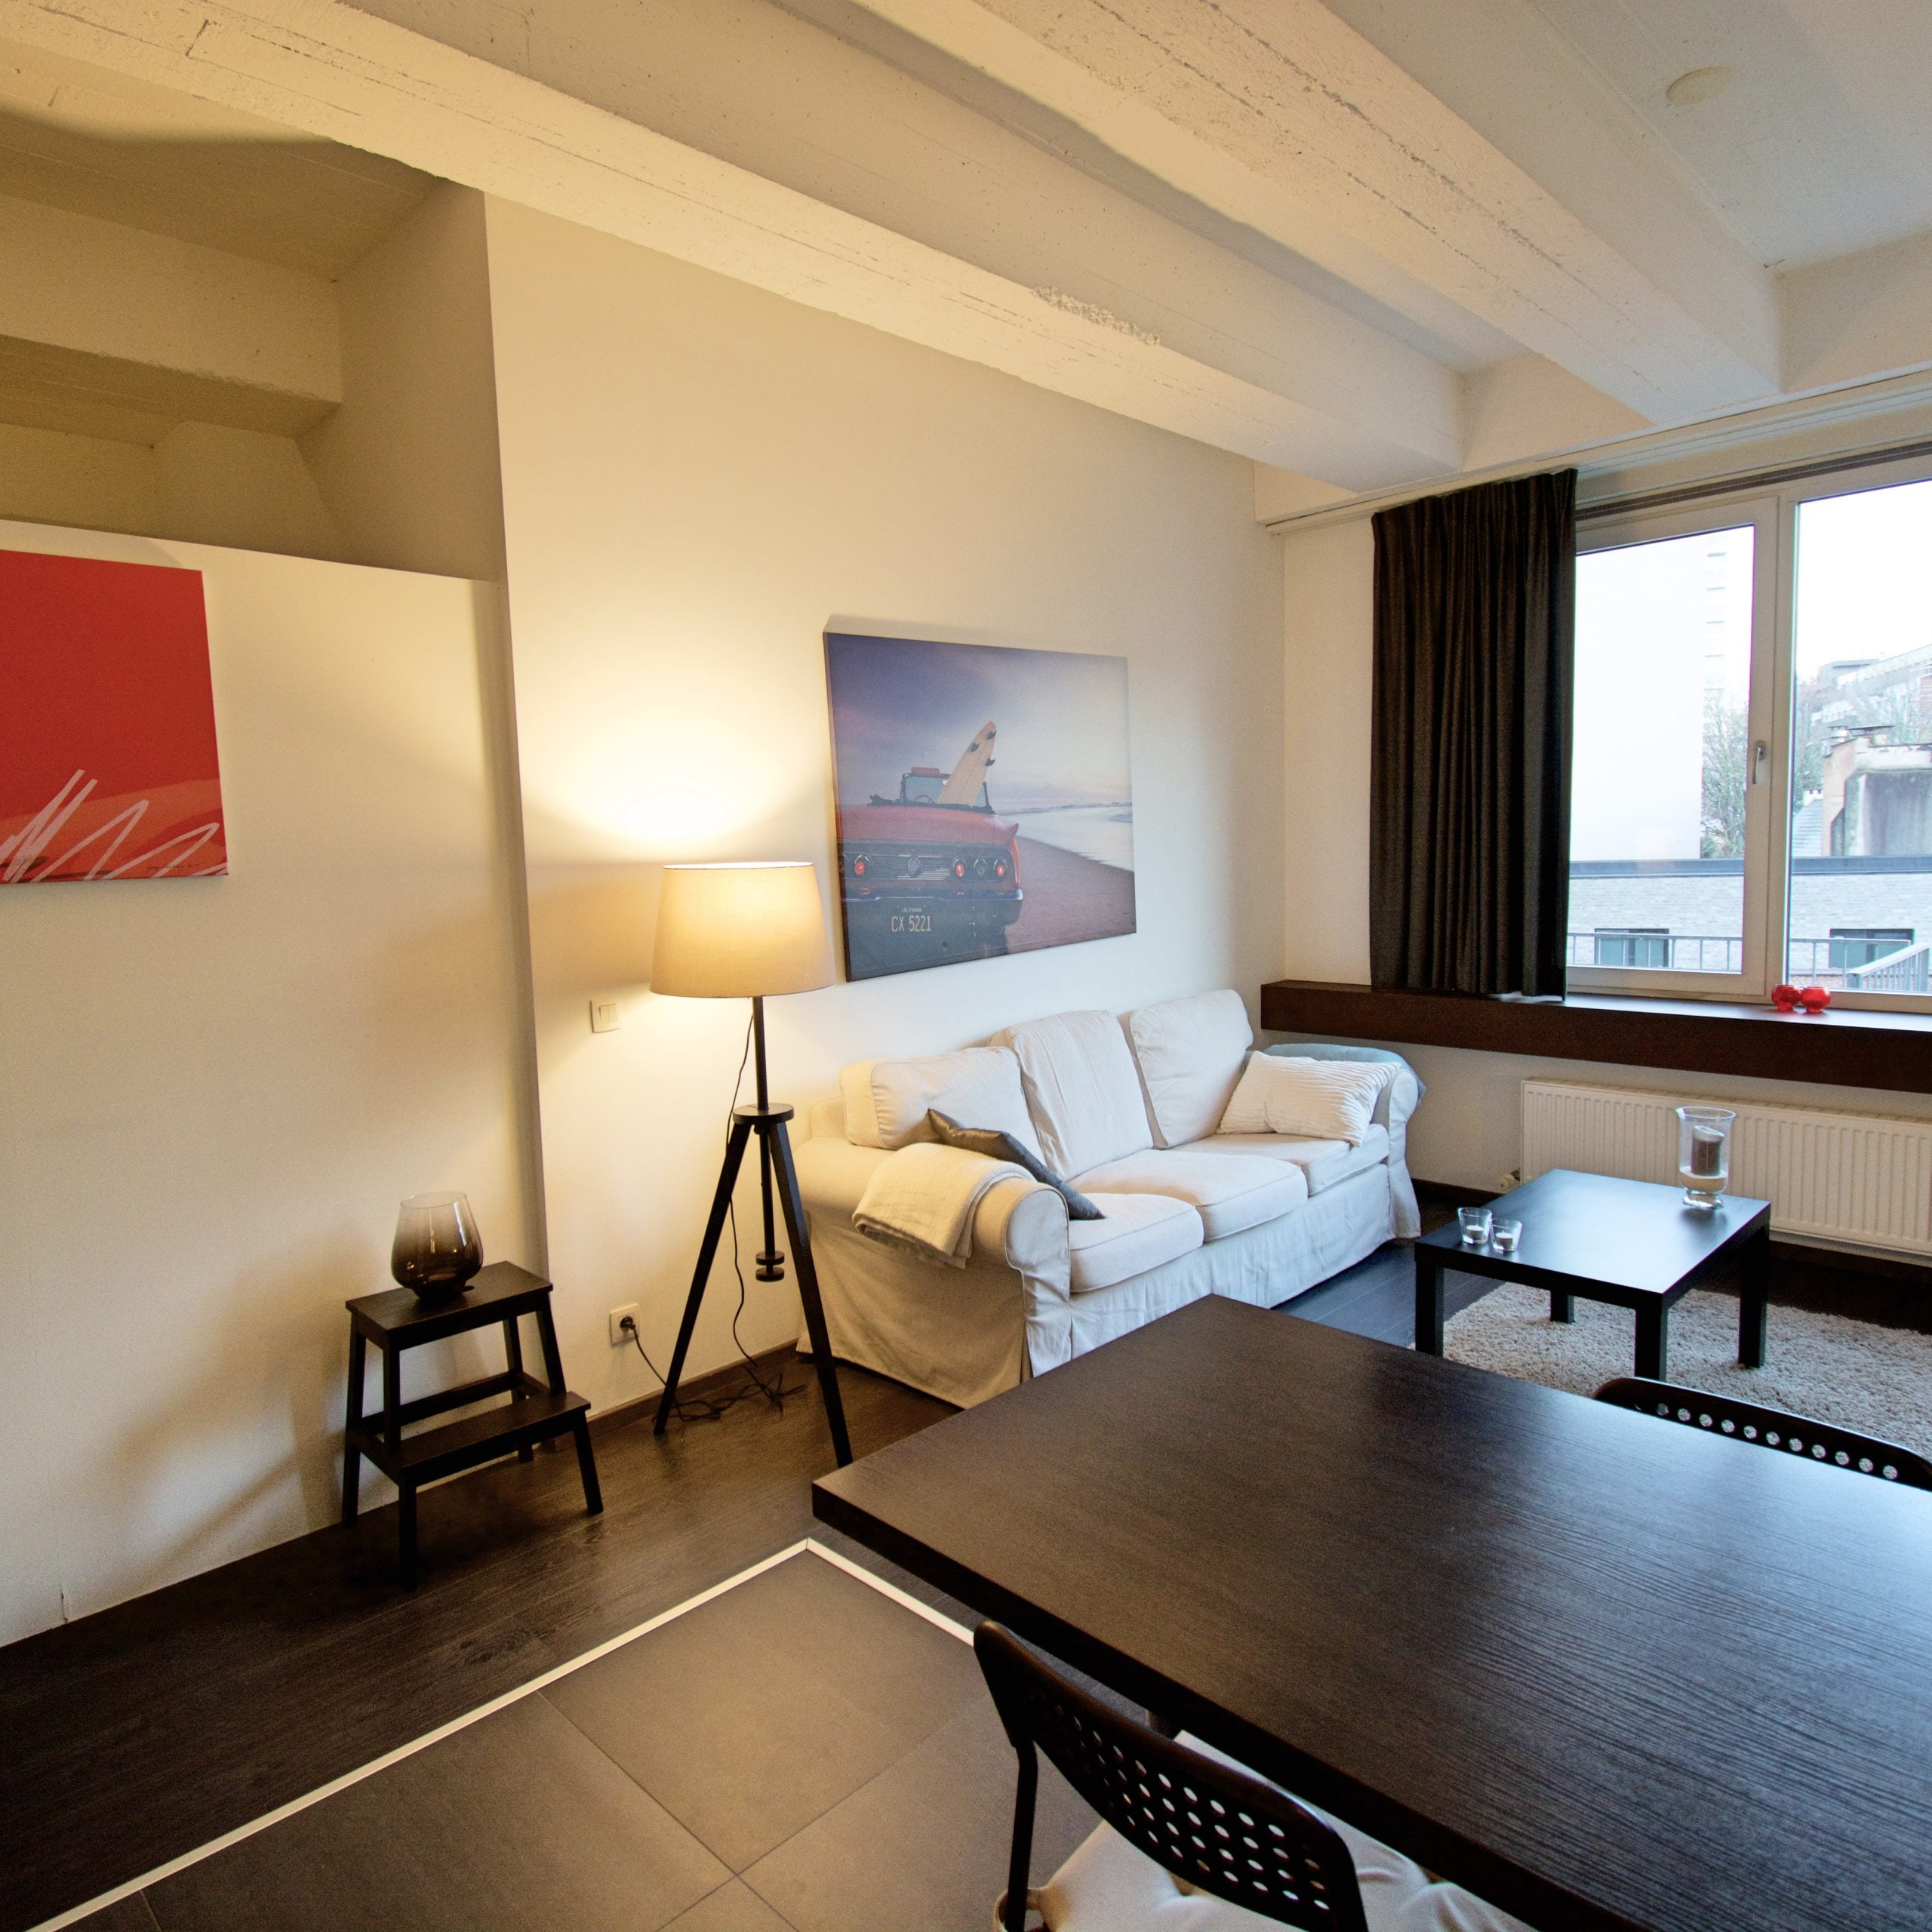 Mikado - Attractive expat apartment in Antwerp centre7